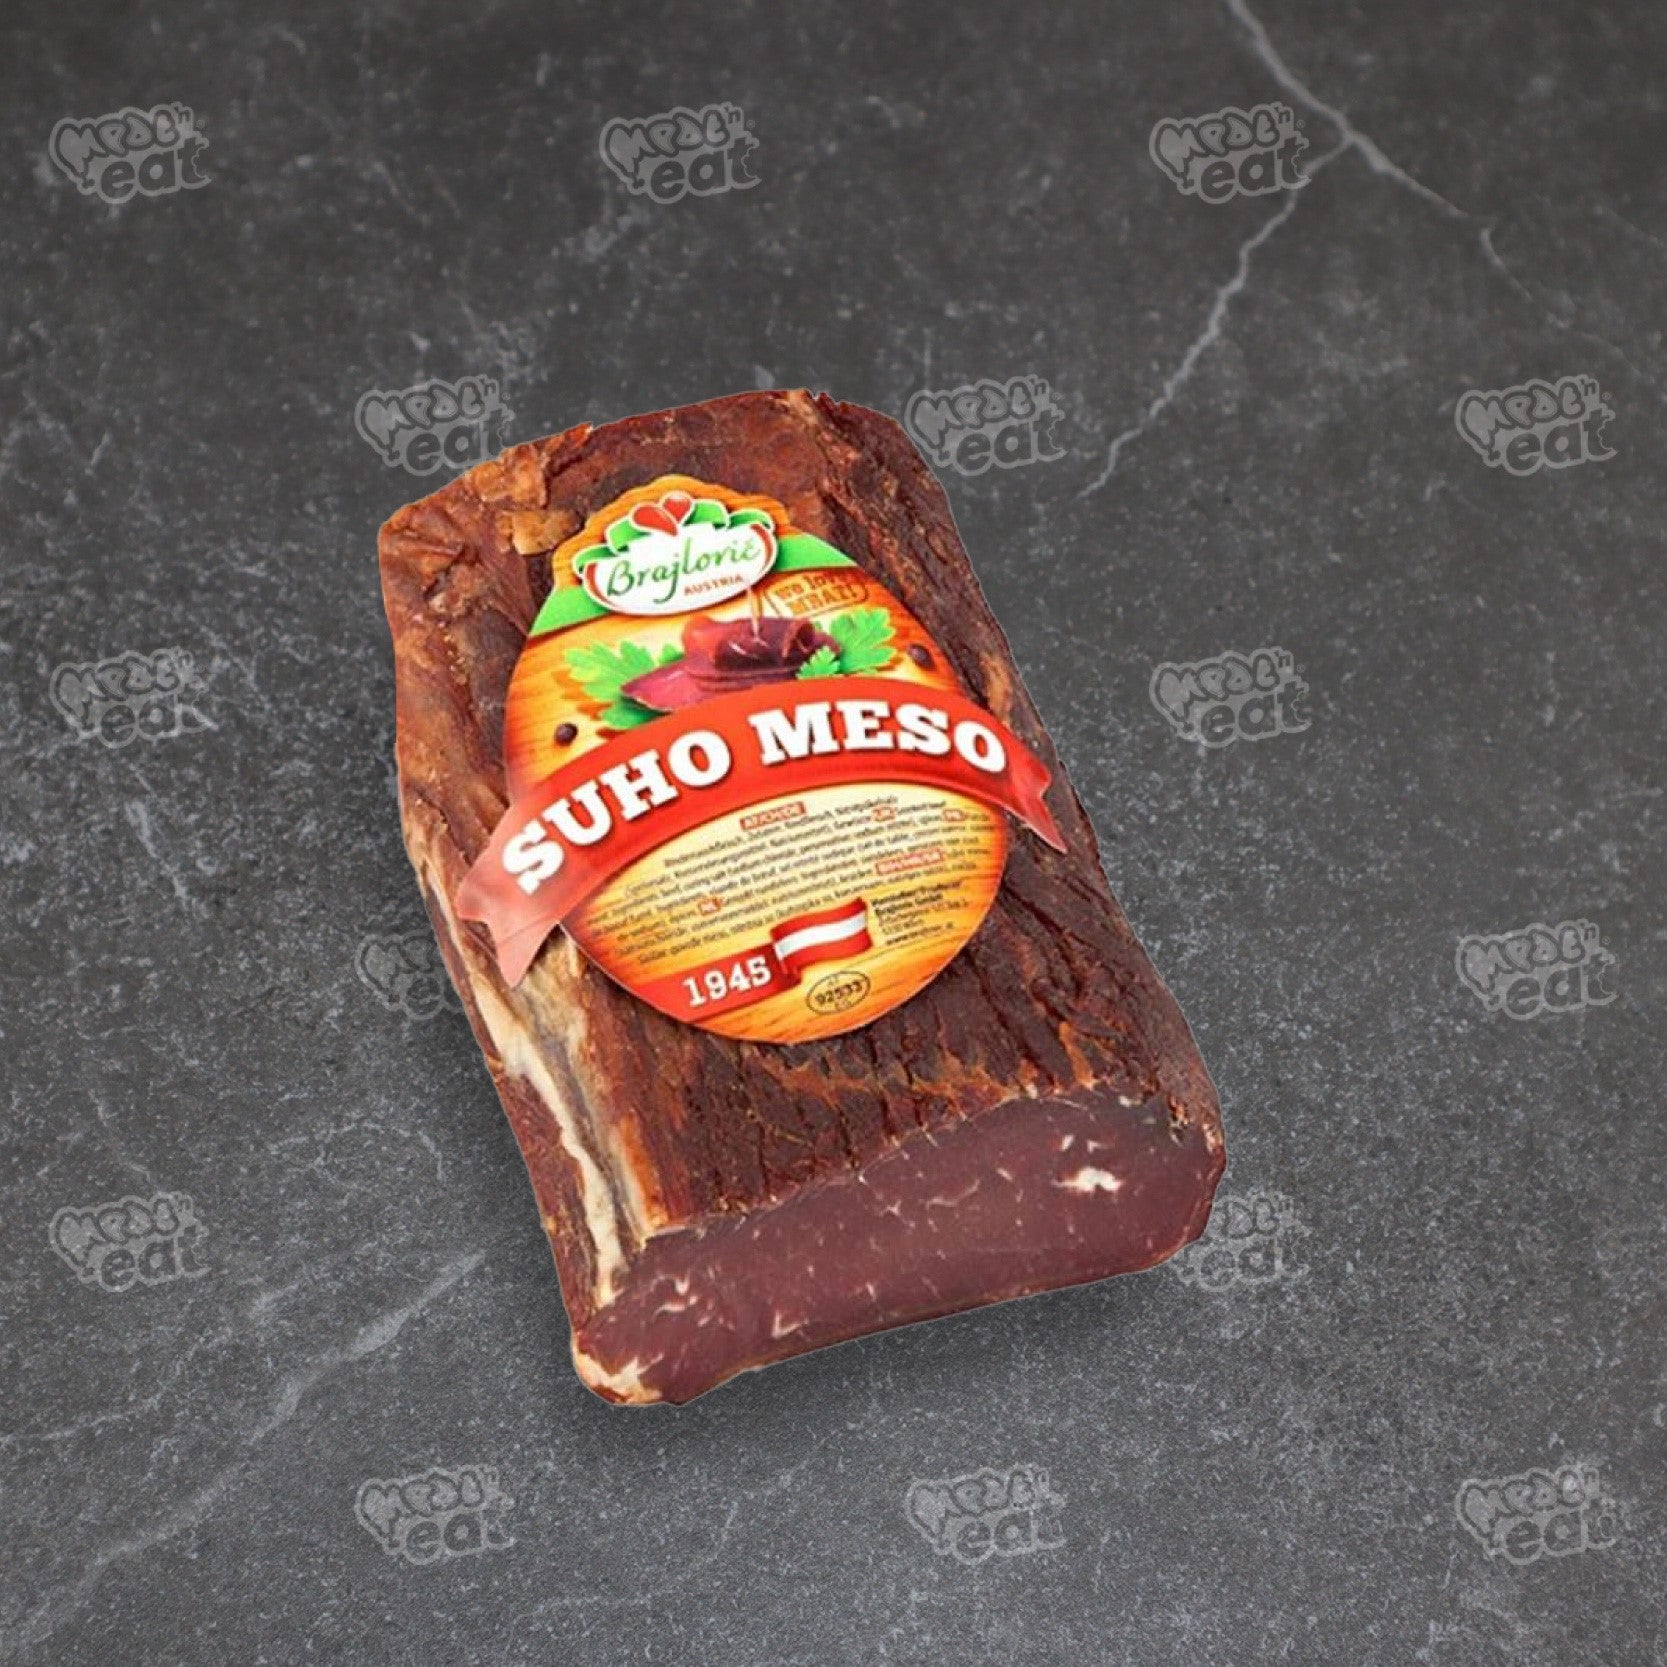 Suho Meso/Beef Jerky Brajlovic +/-235 gram